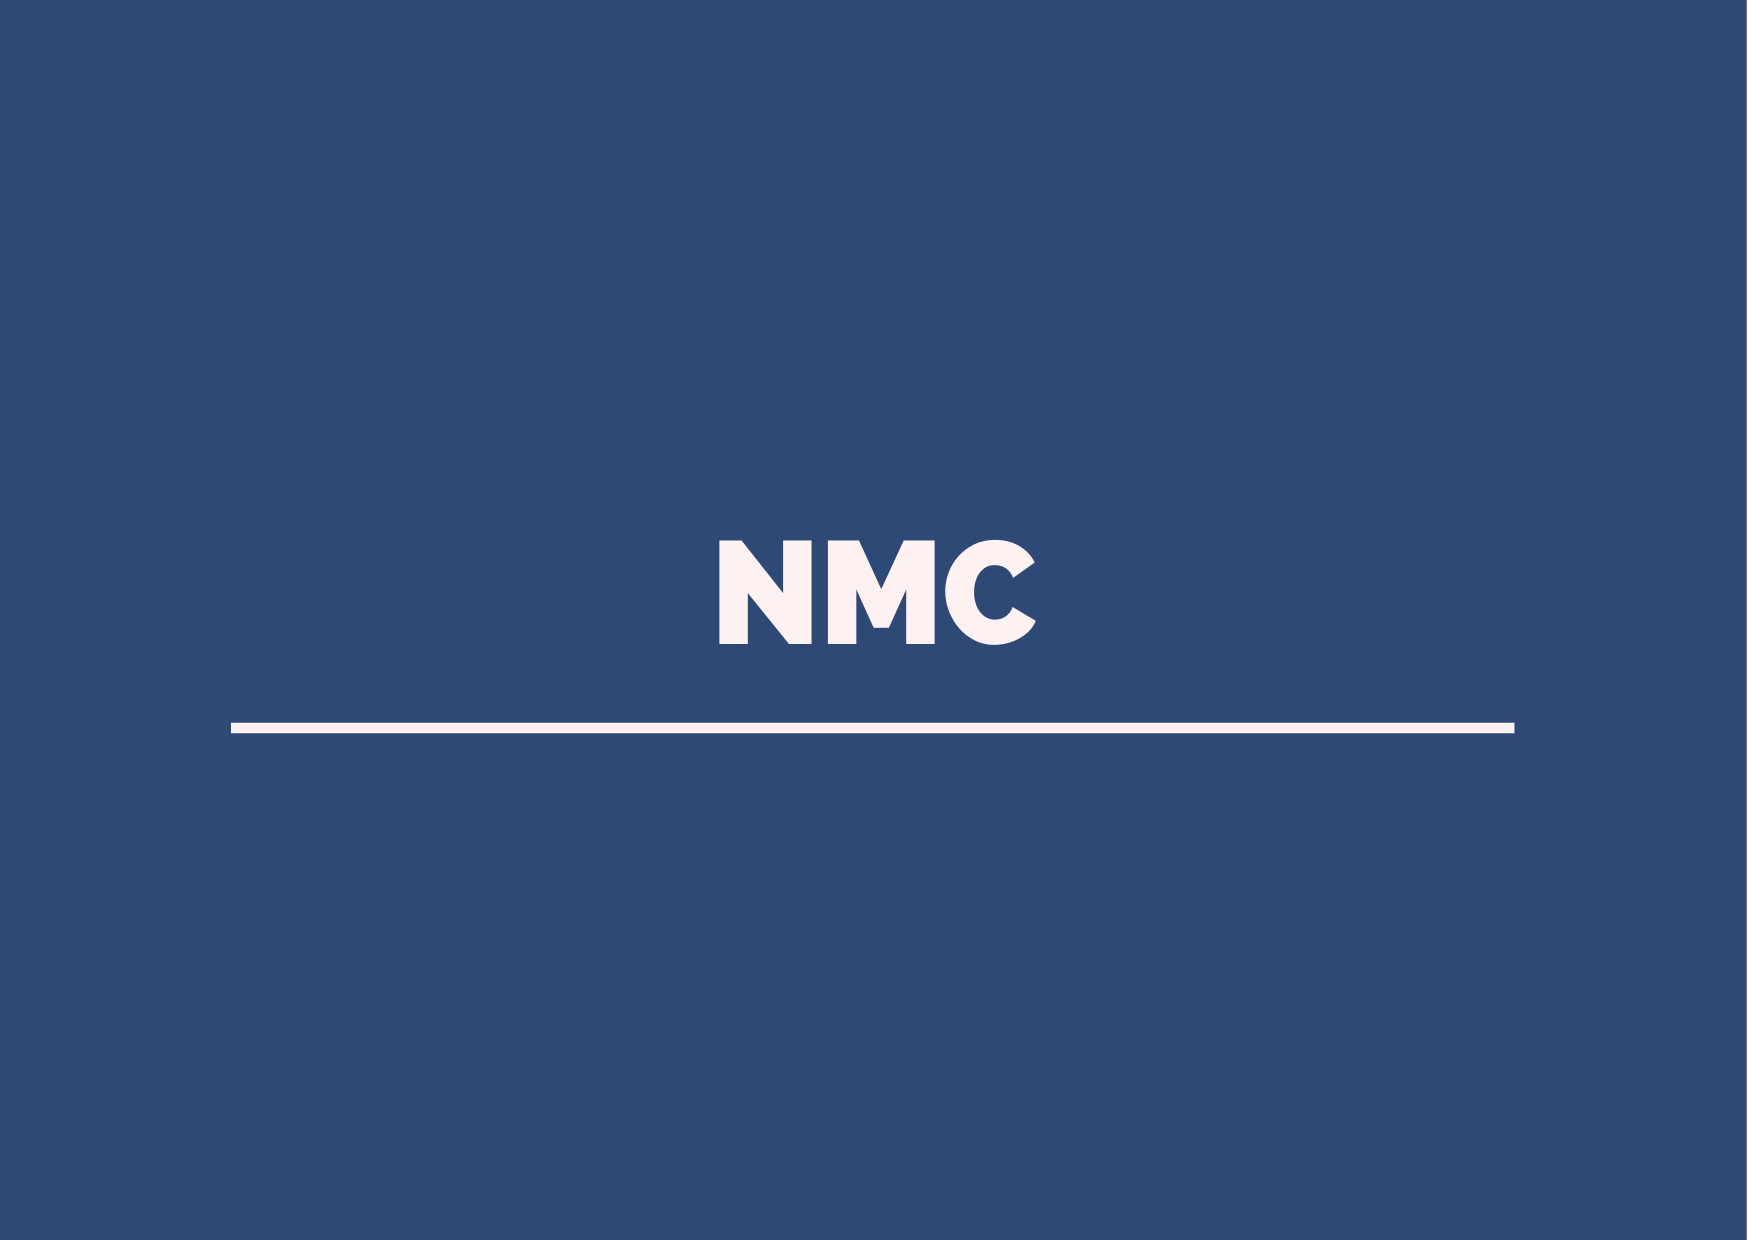 NMC text